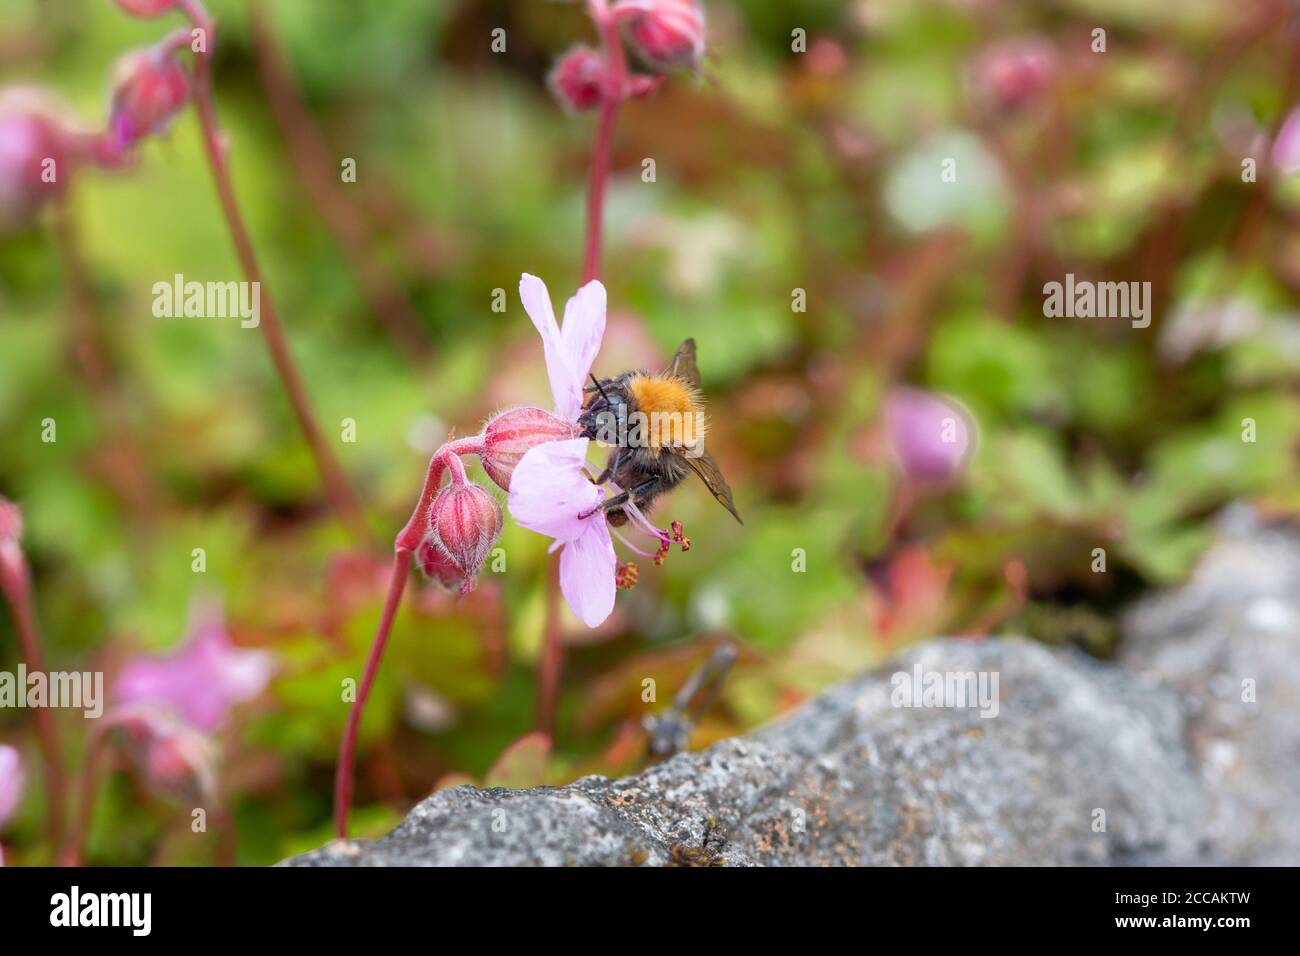 Bee on a flower, geranium dalmaticum Stock Photo